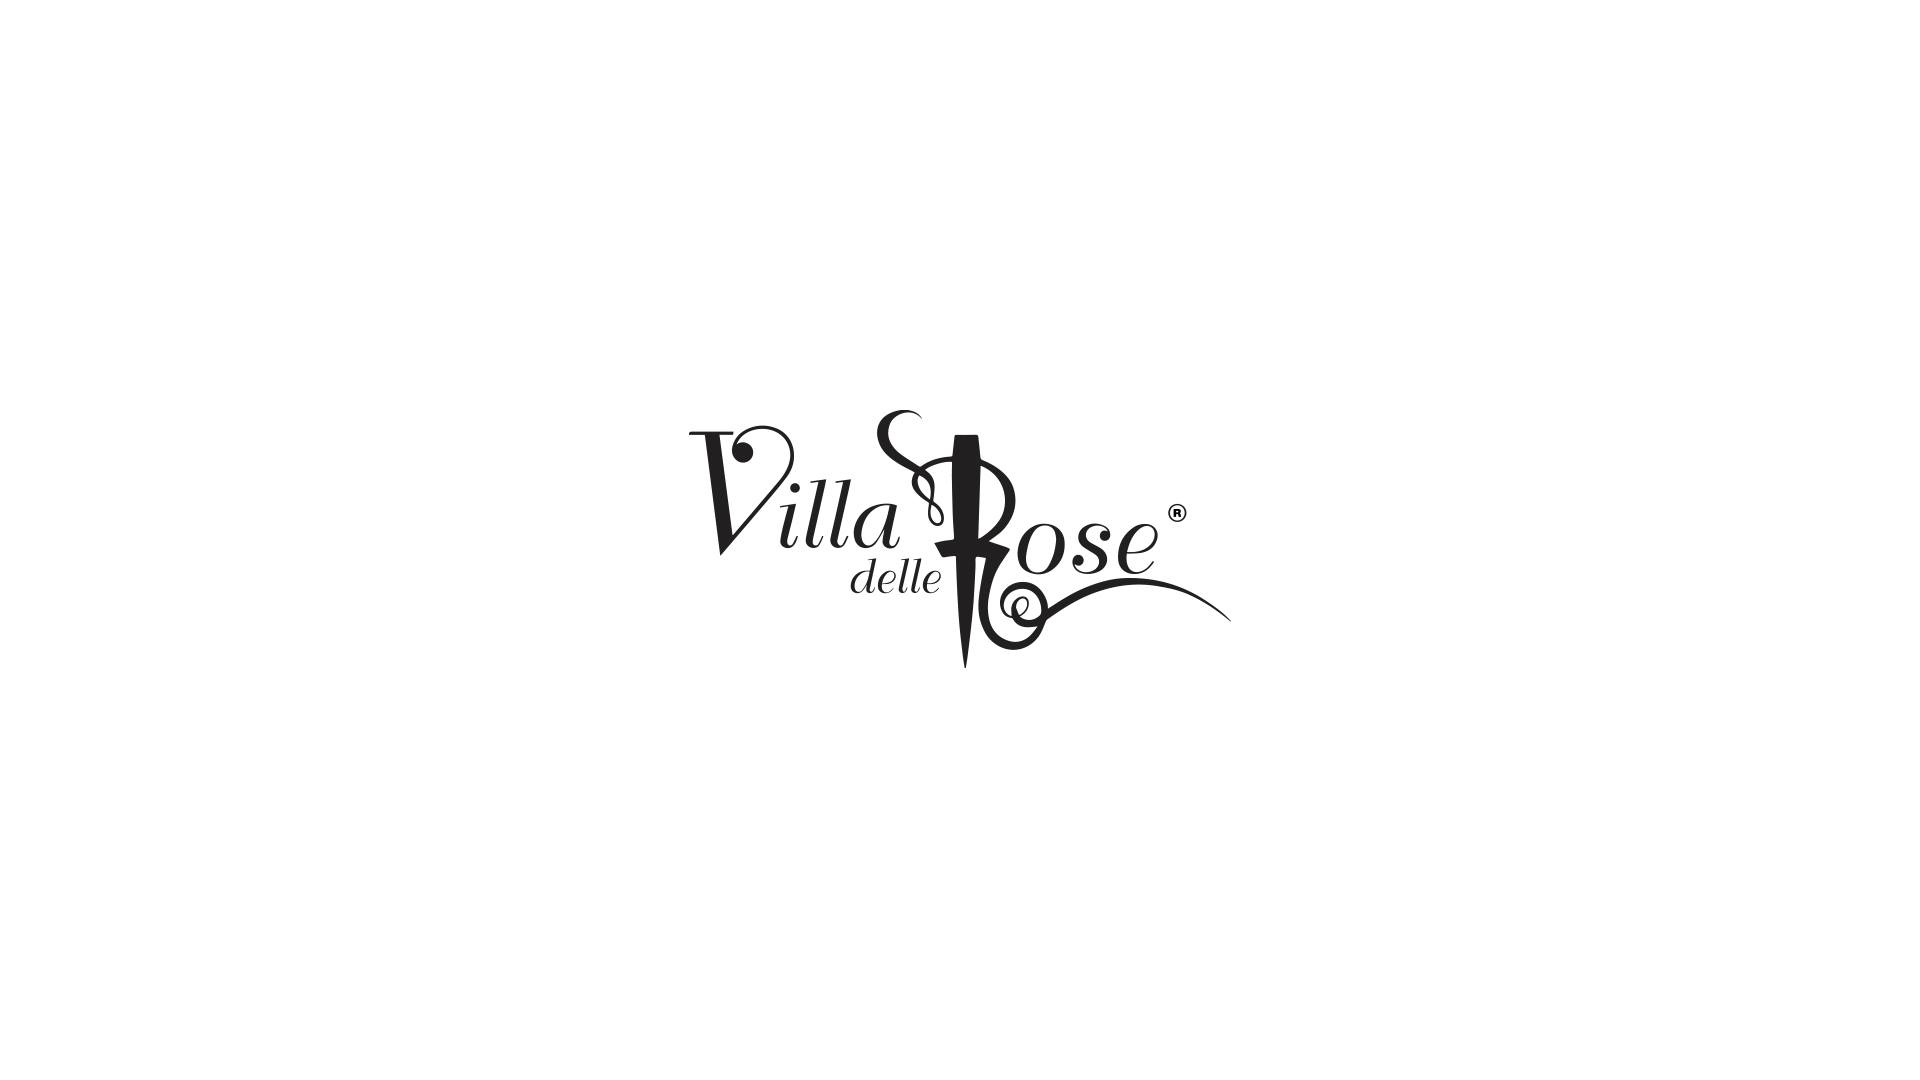 Discoteca Villa delle Rose, guest dj Dirty South